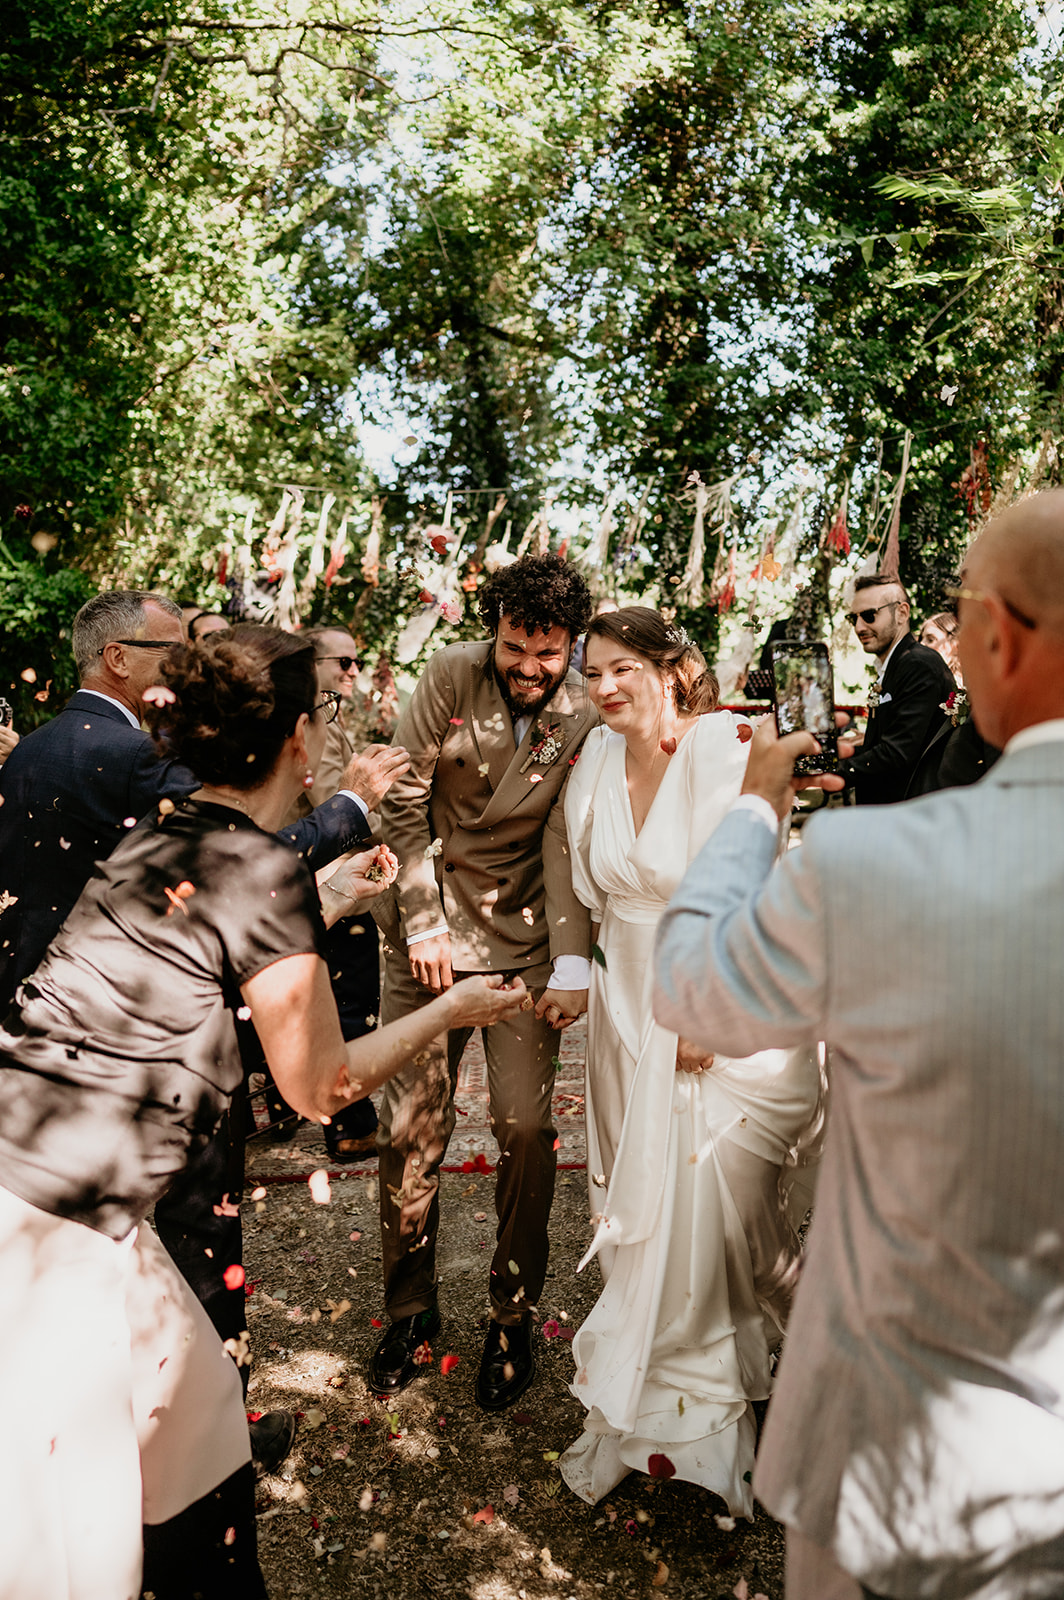 Wedding in Italy
Borgo Fregnano Brisighella
Italy wedding photographer
Bosco Forli